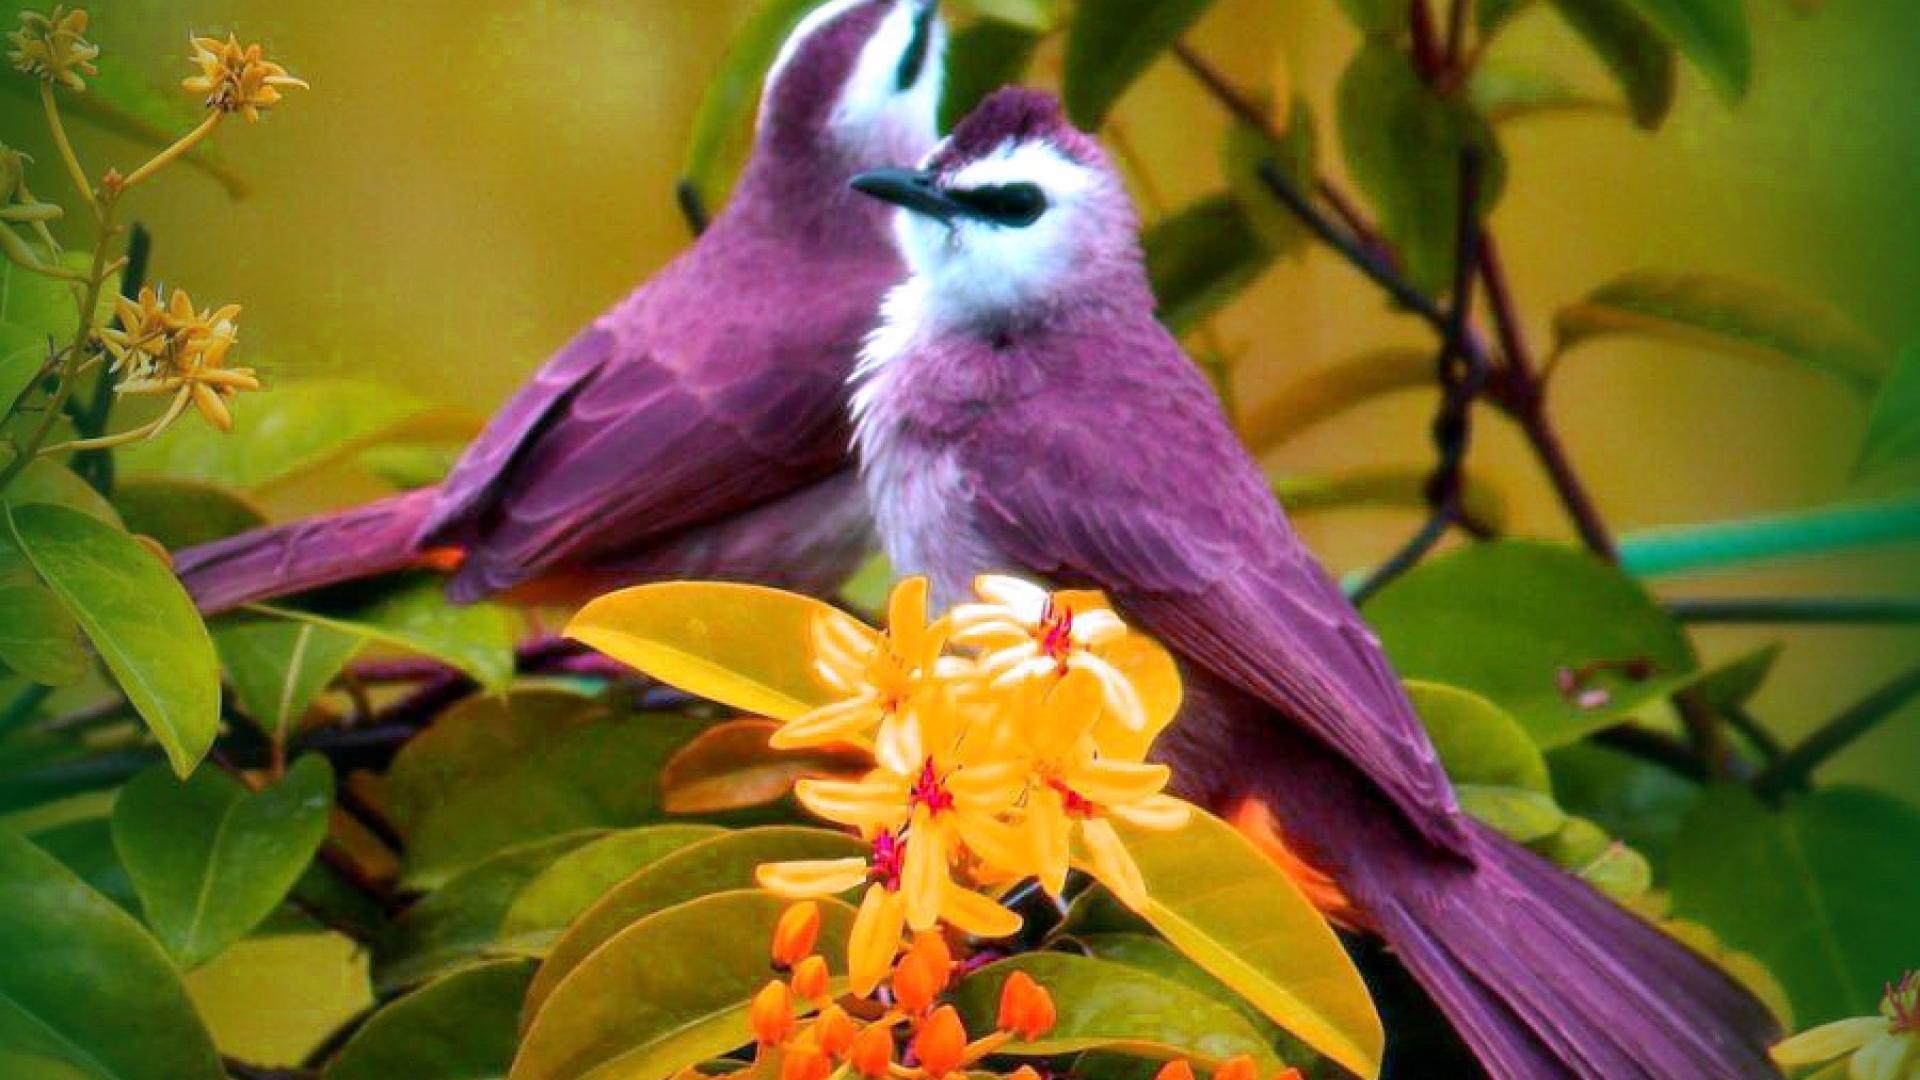 Beautiful Bird and Flower Wallpapers - Top Free Beautiful Bird and